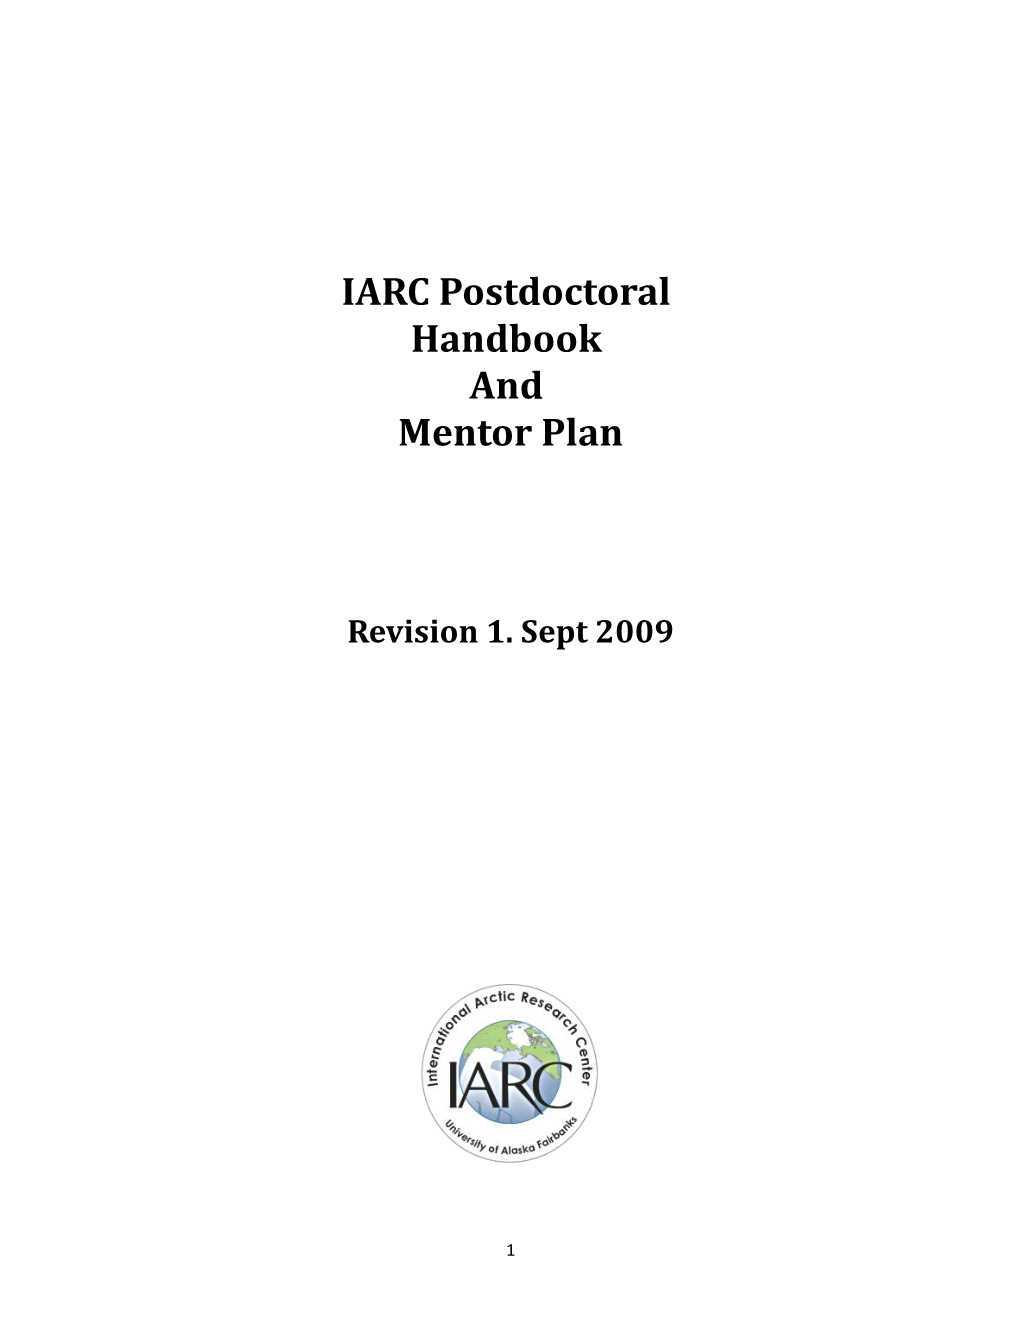 IARC Postdoctoral Handbook